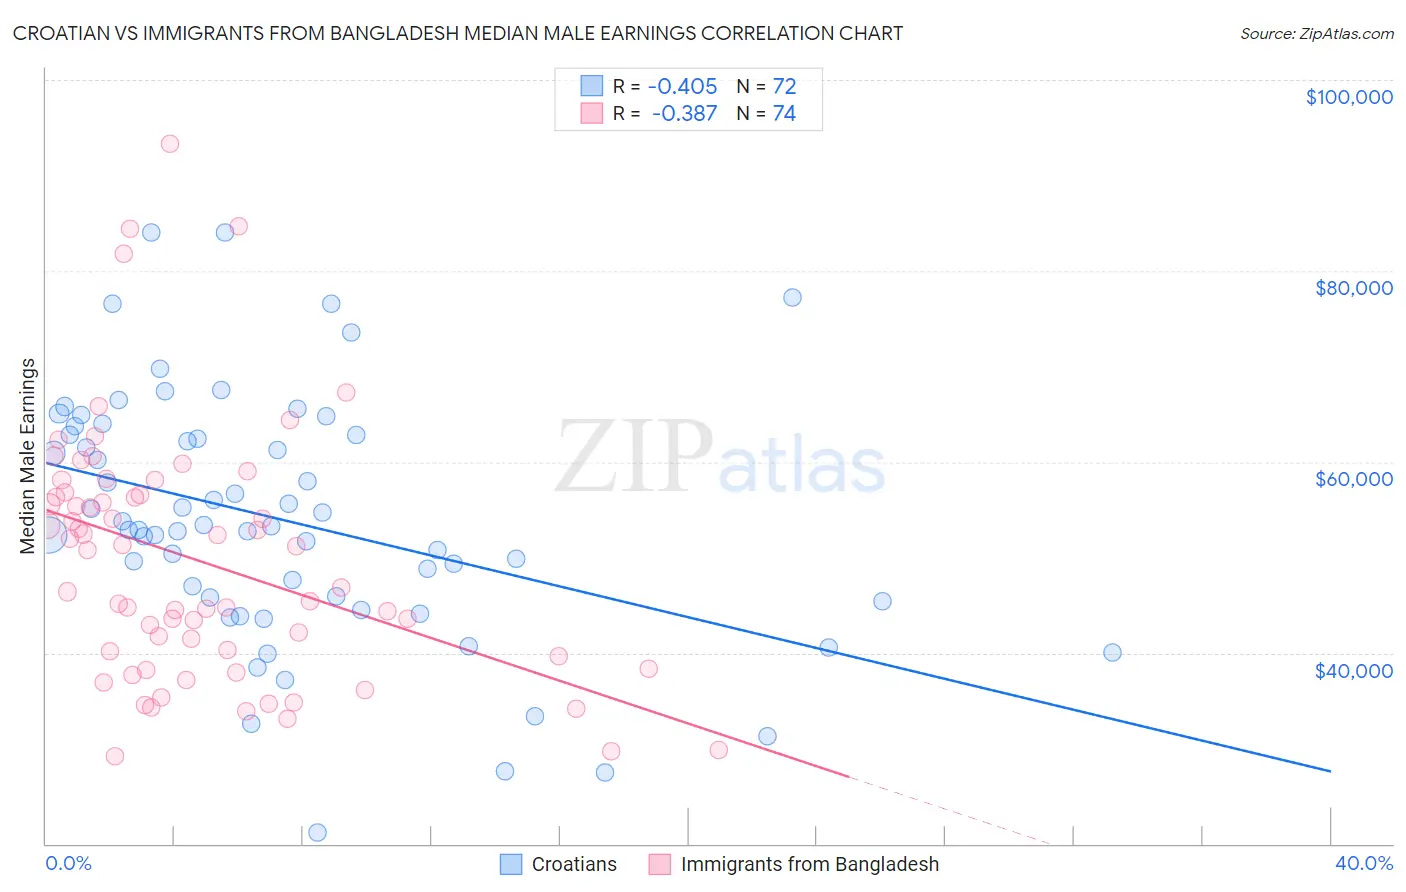 Croatian vs Immigrants from Bangladesh Median Male Earnings